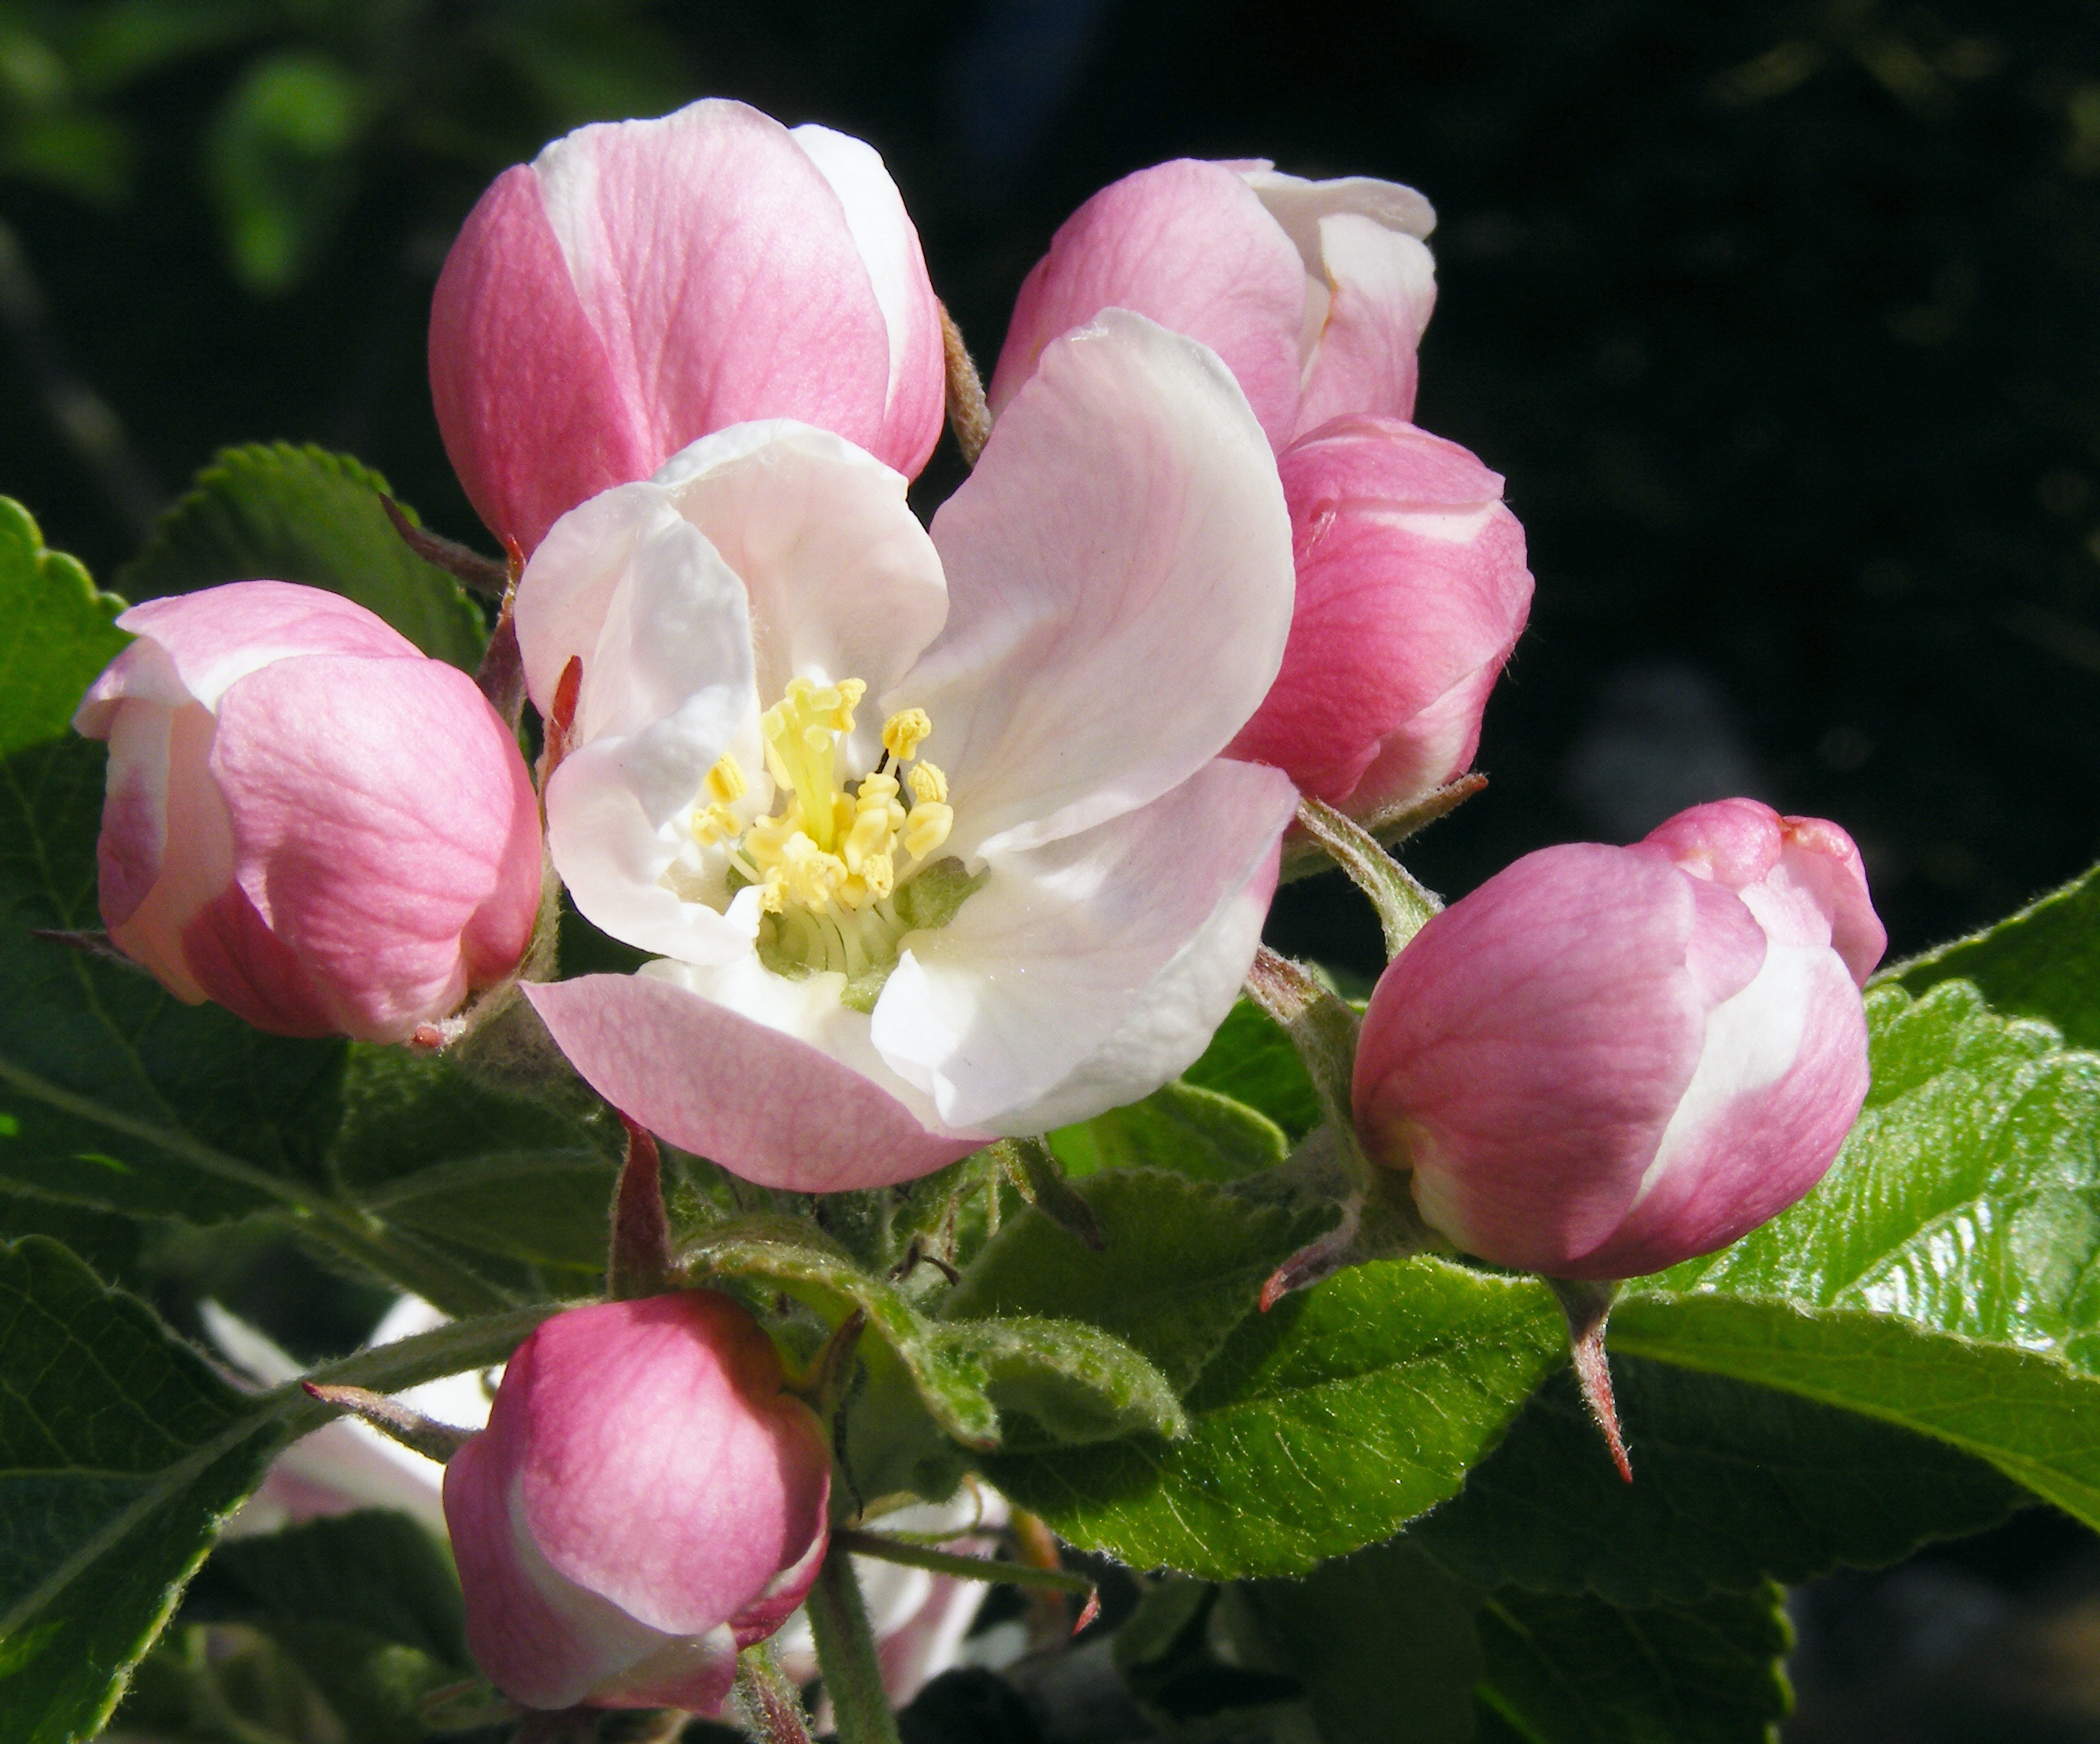 File:Apple blossom 02A.jpg - Wikimedia Commons